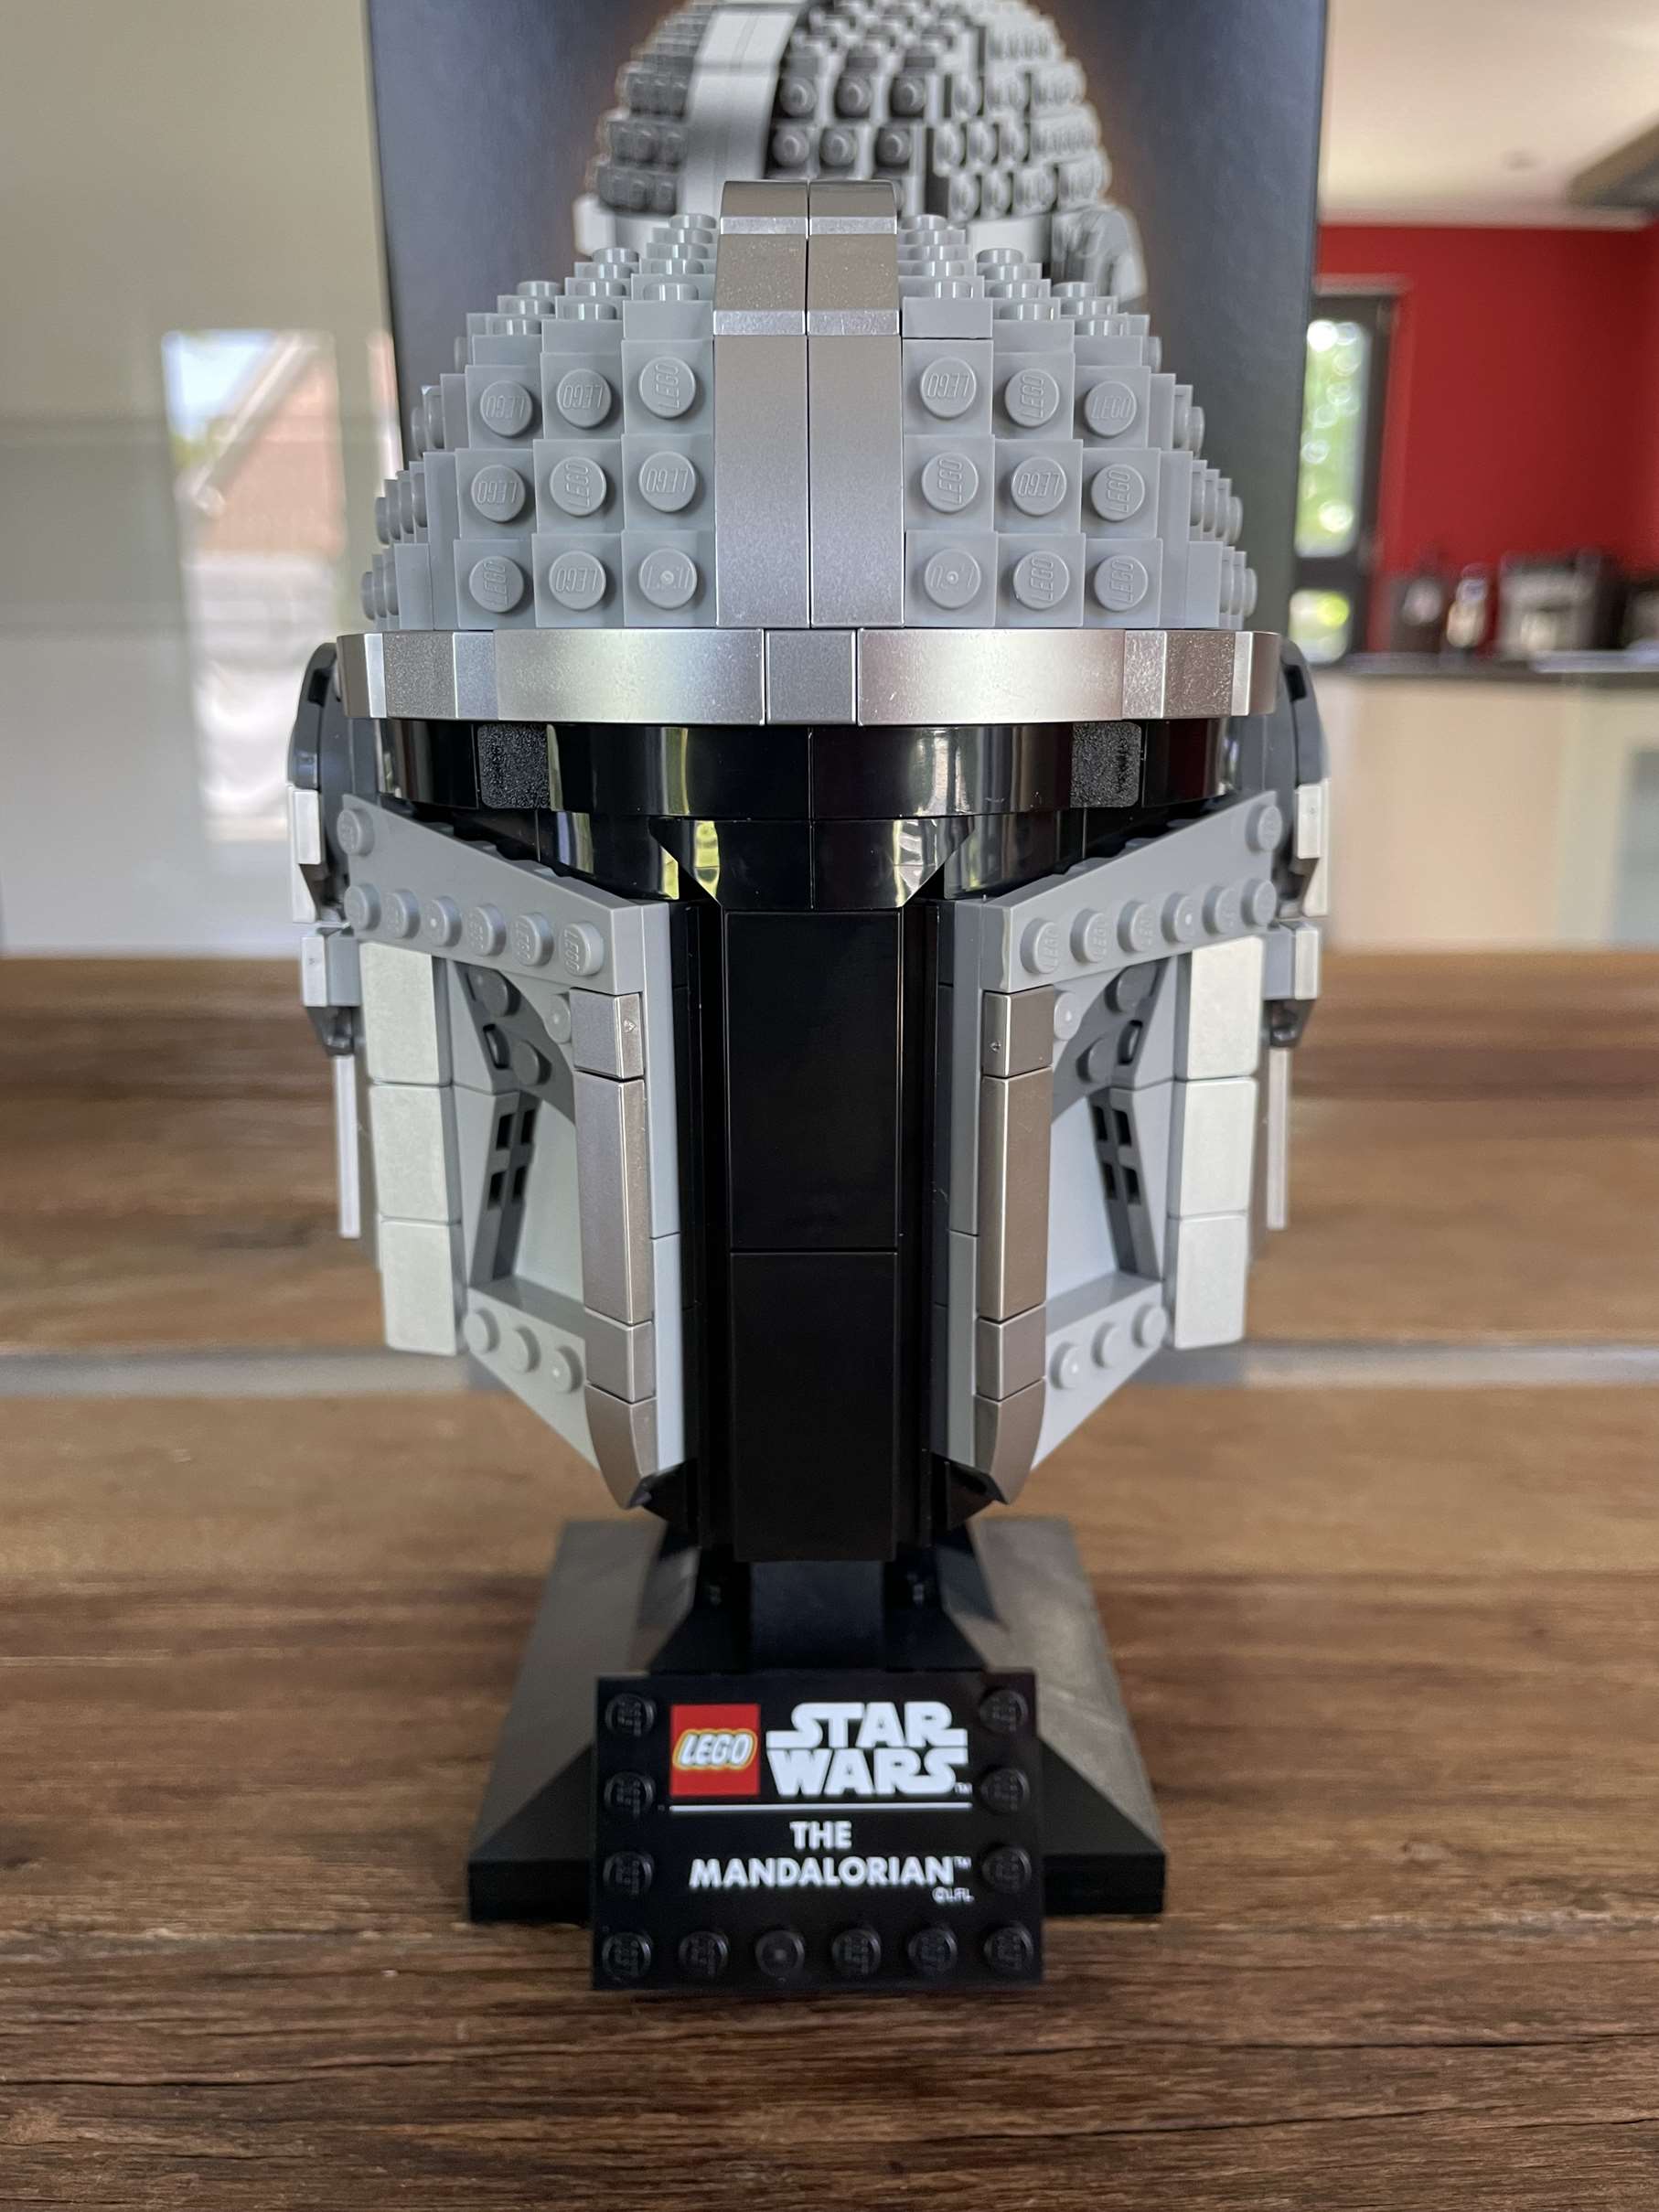 LEGO 75328 Mandalorianer Helm